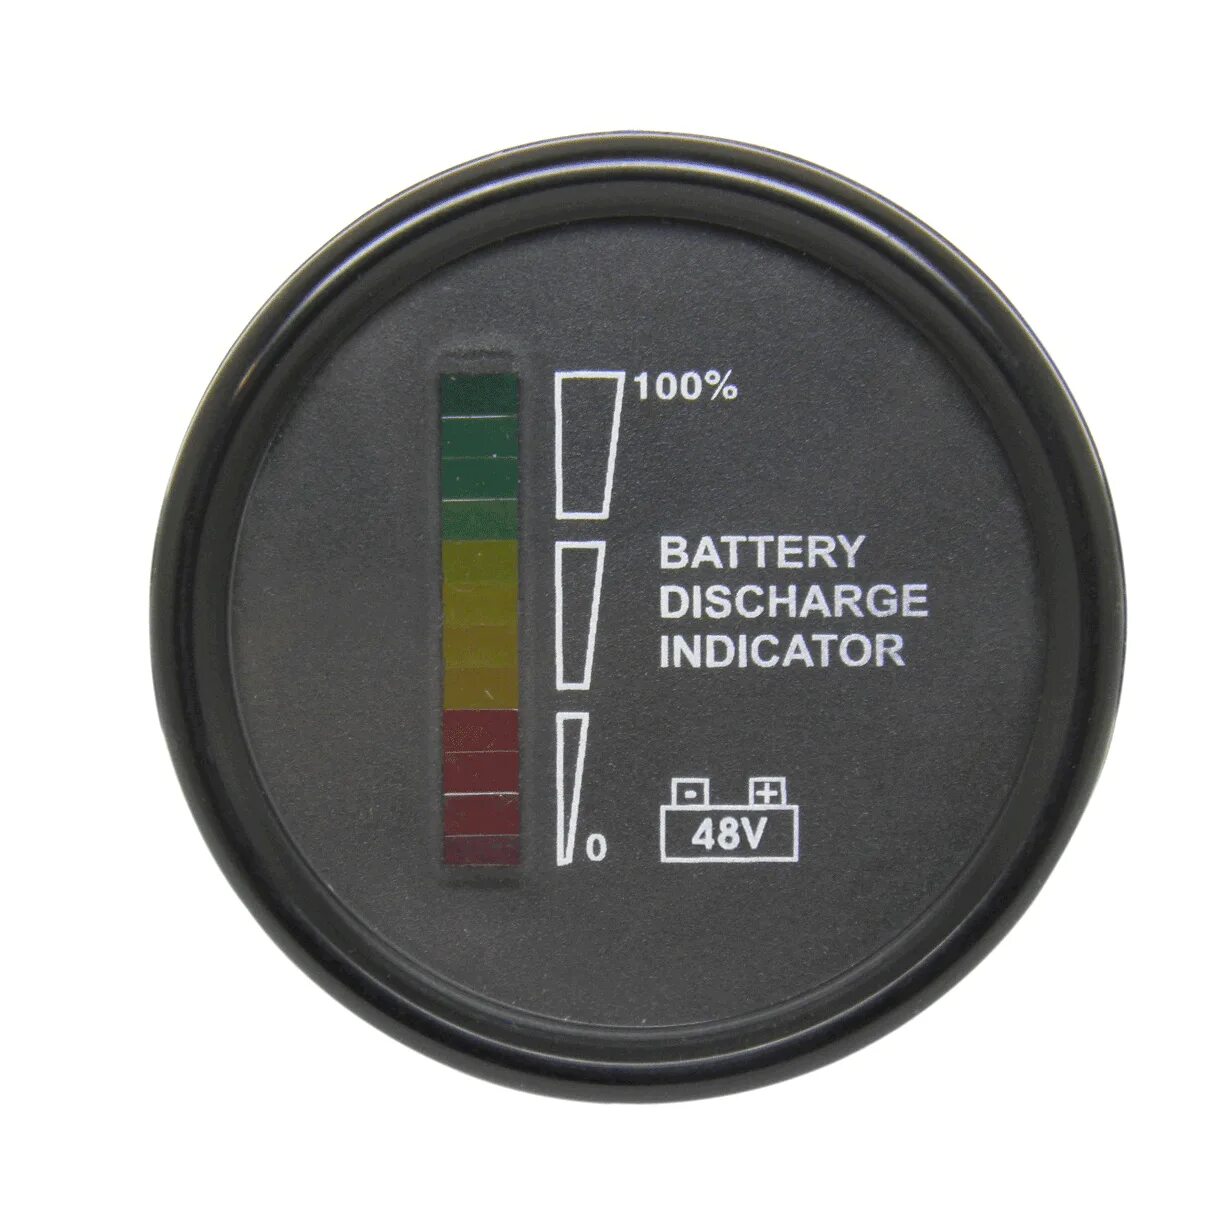 Battery discharge indicator BDI-40vm. Battery discharge indicator ej03i01. Discharging indicator. КАНГИ индикатор бирдж.